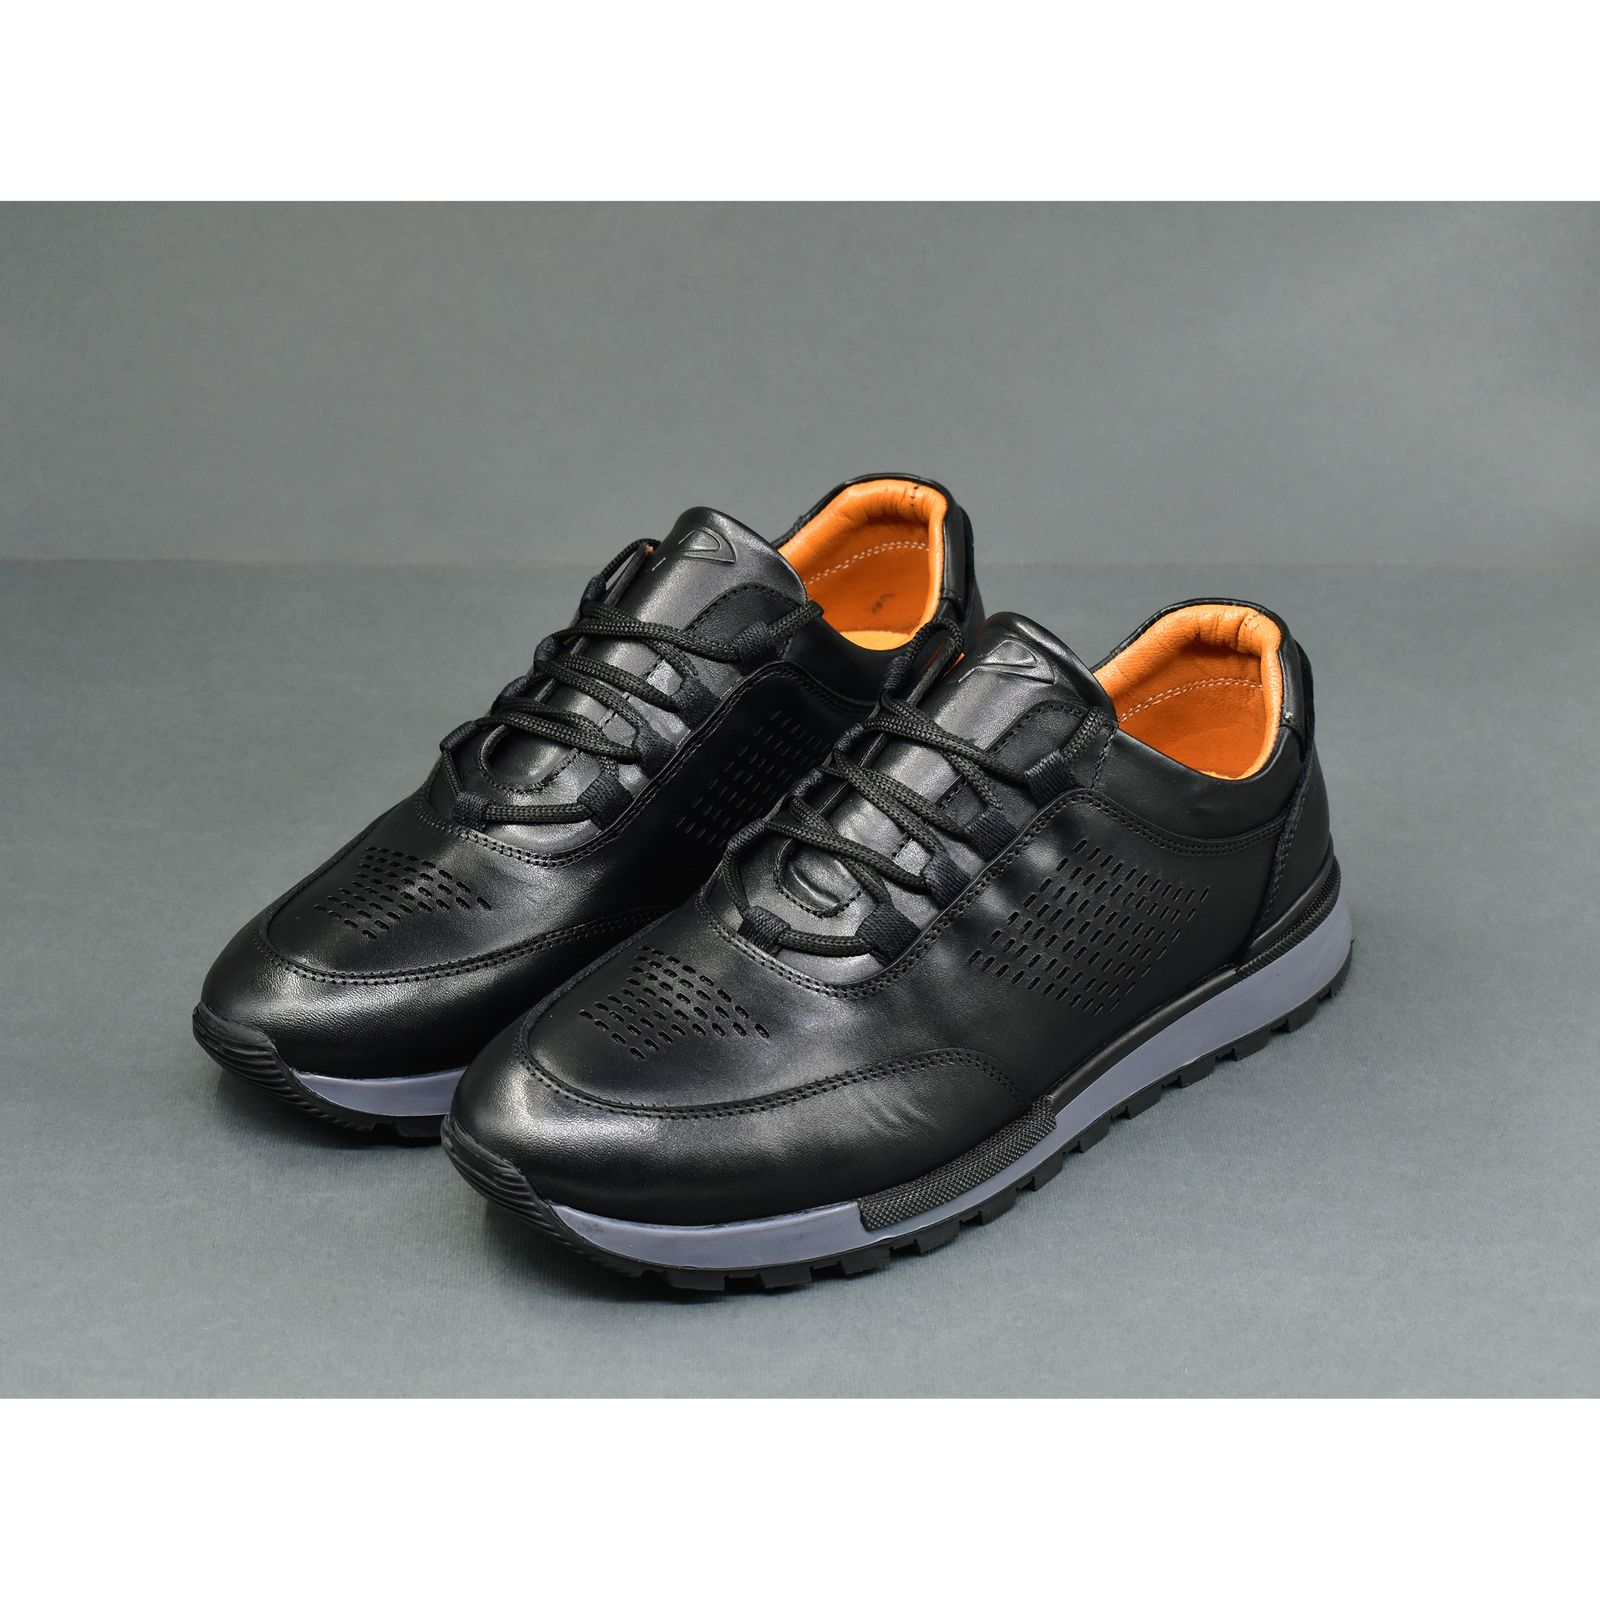 کفش روزمره مردانه پاما مدل ME-644 کد G1804 -  - 3